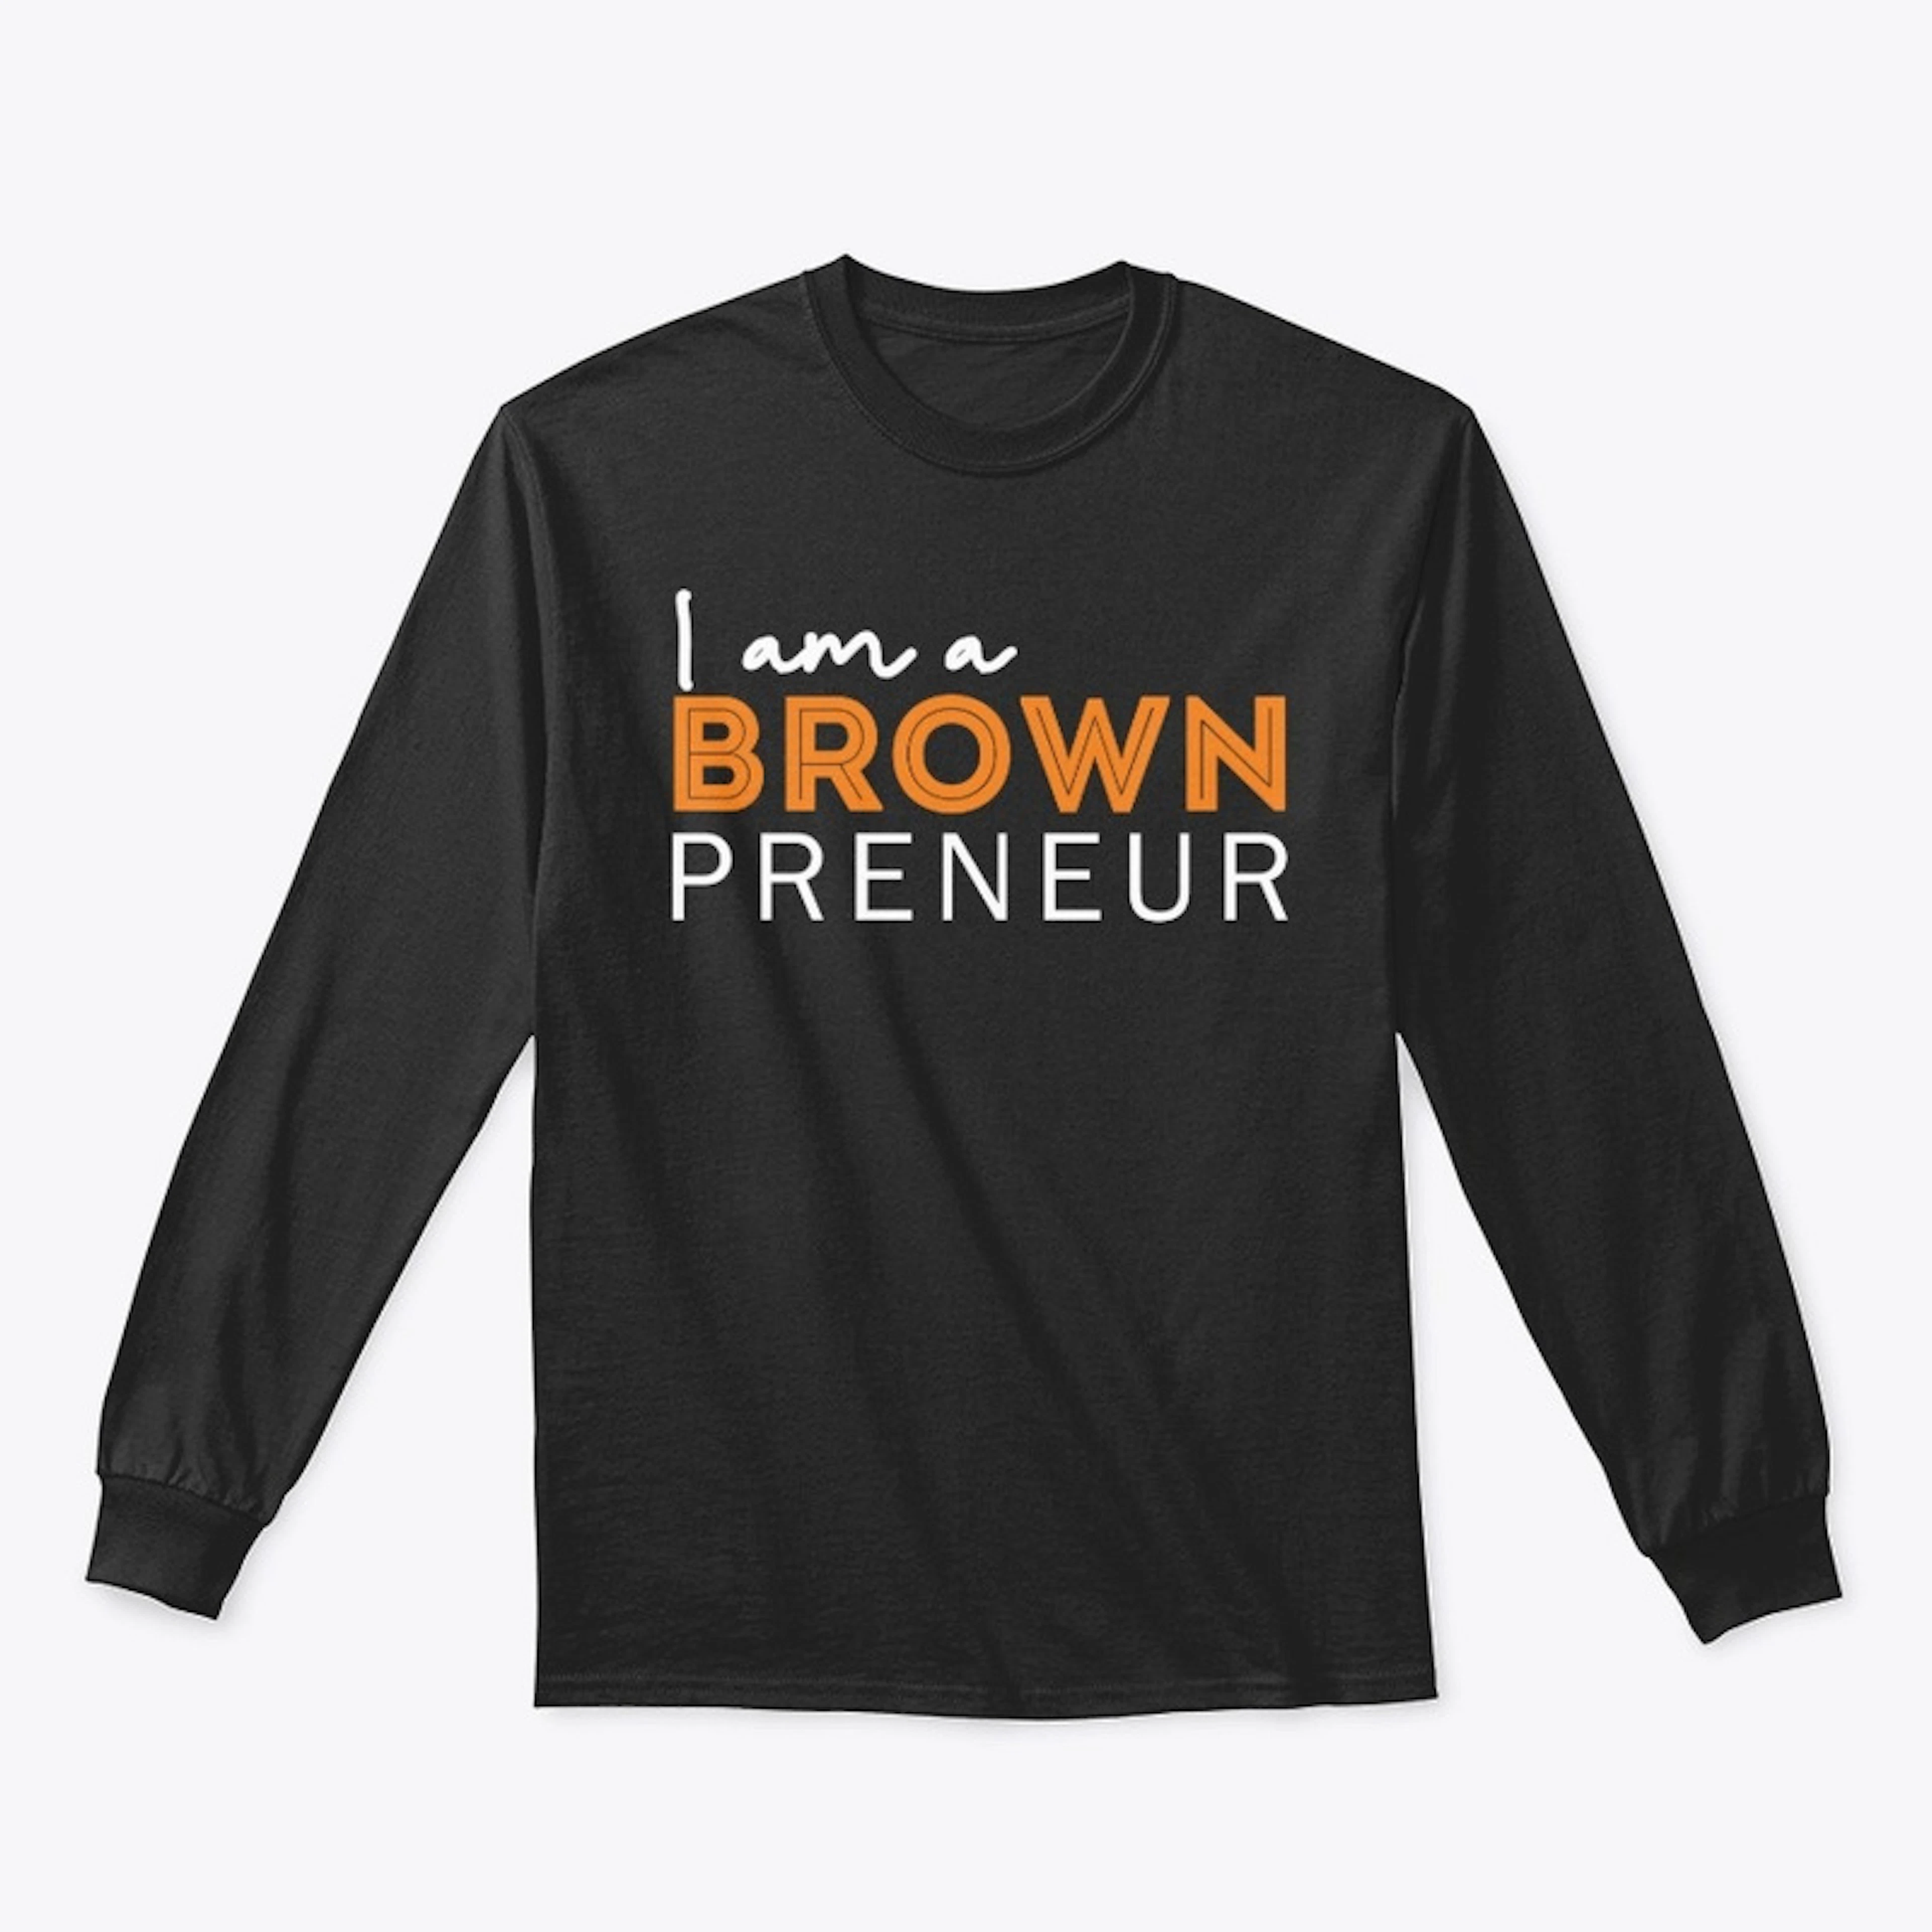 I am a Brownpreneur!